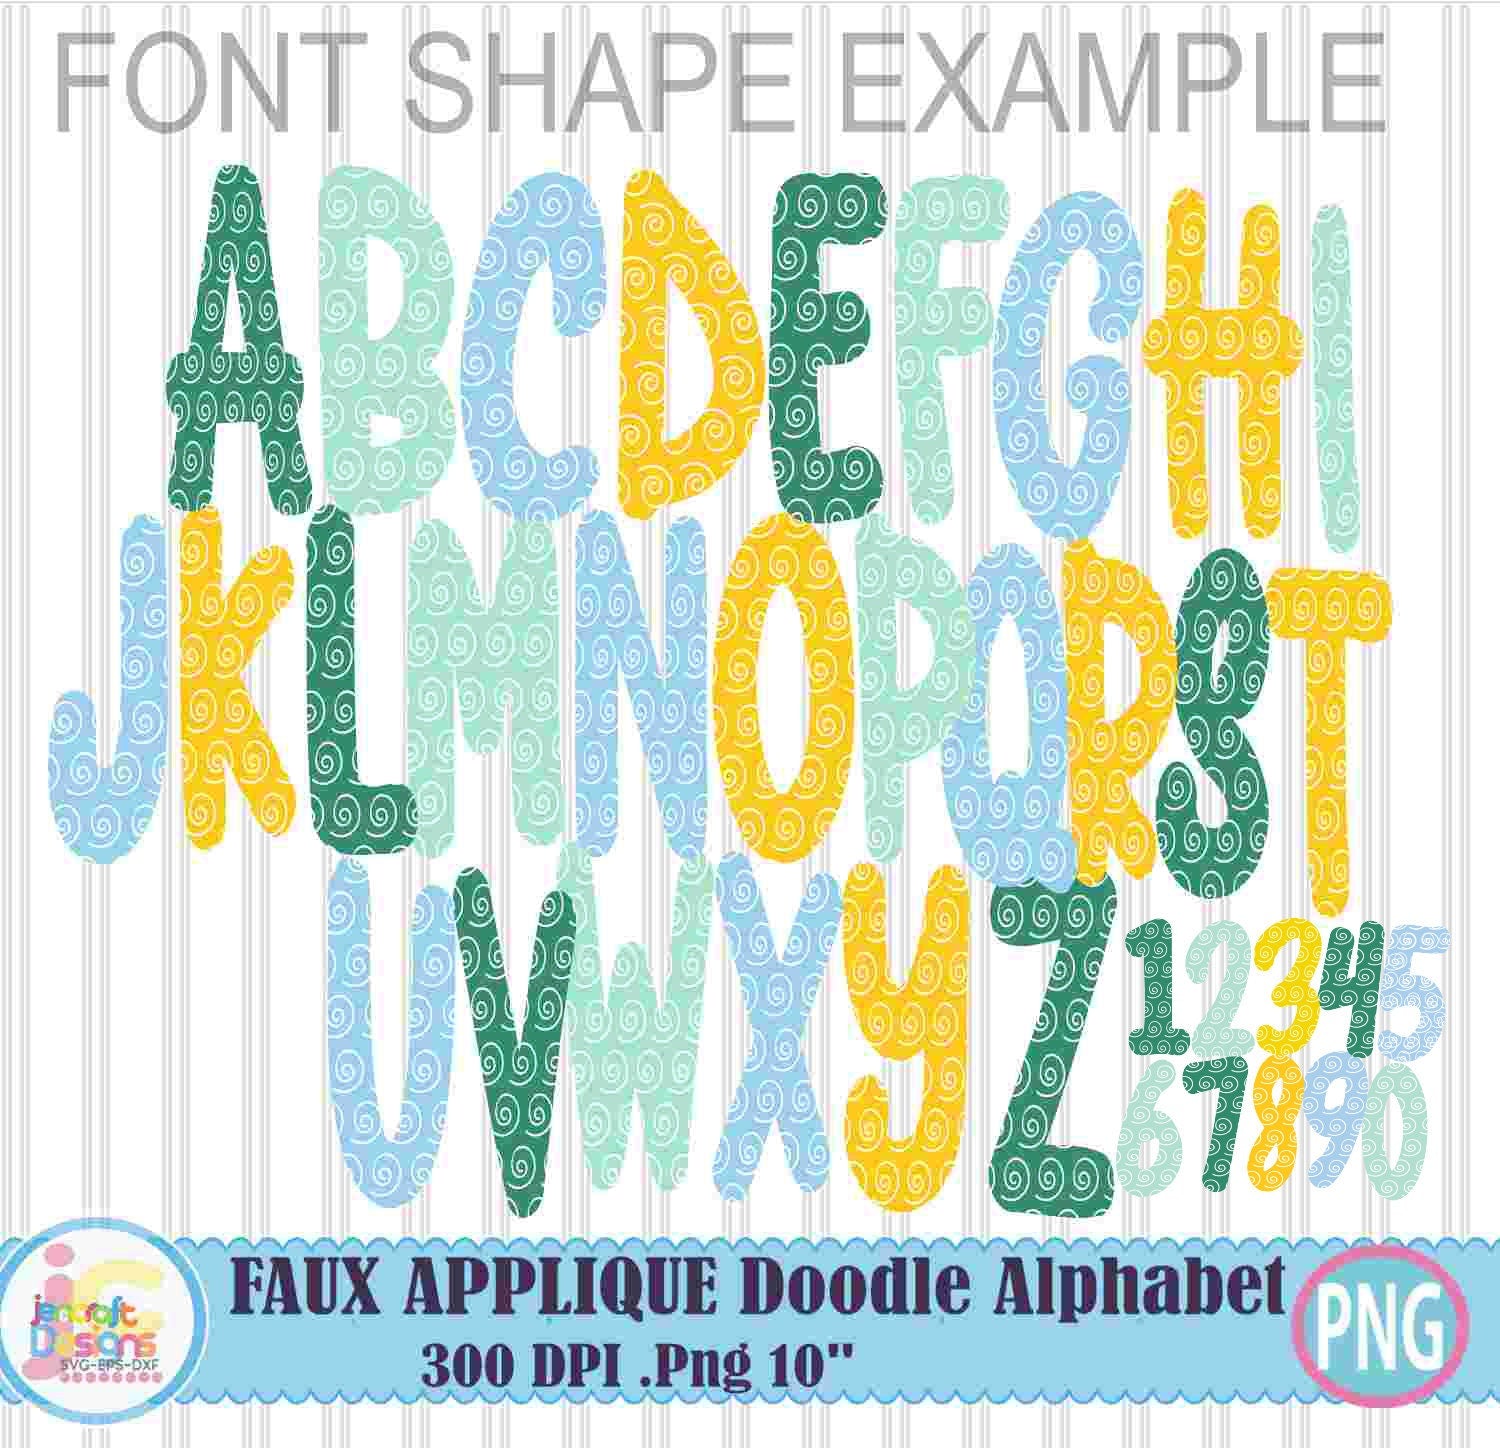 Easter Faux Applique Doodle Letters Alphabet Png Print File for Sublimation or Printing - JenCraft Designs